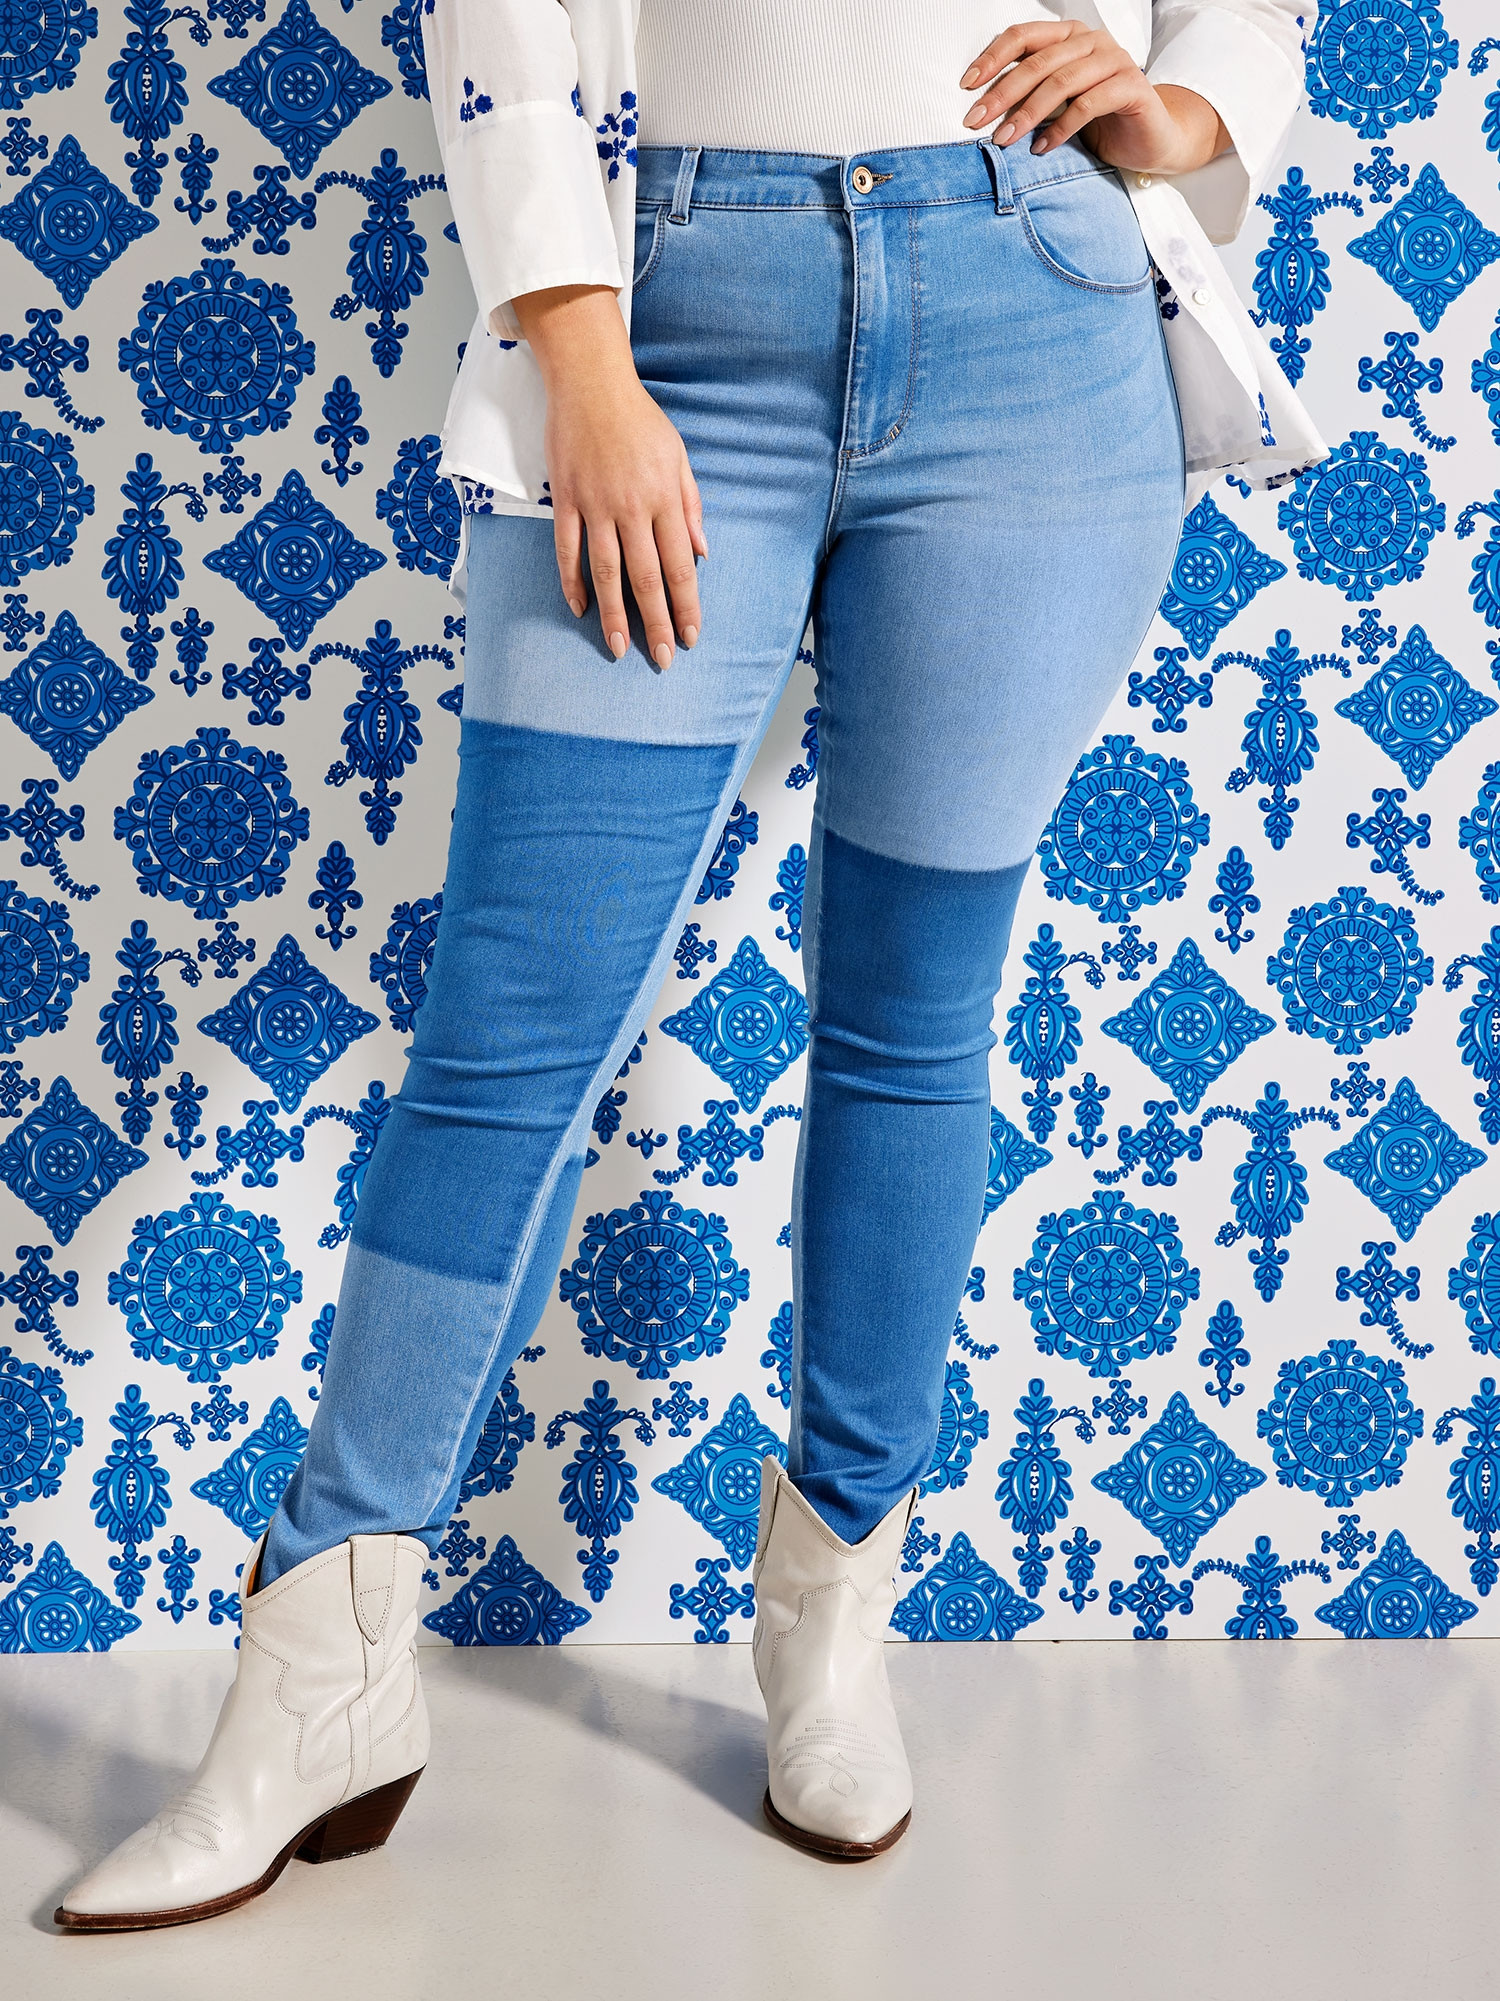 AUGUSTA - Ljusblå jeans i stretchig bomullsdenim